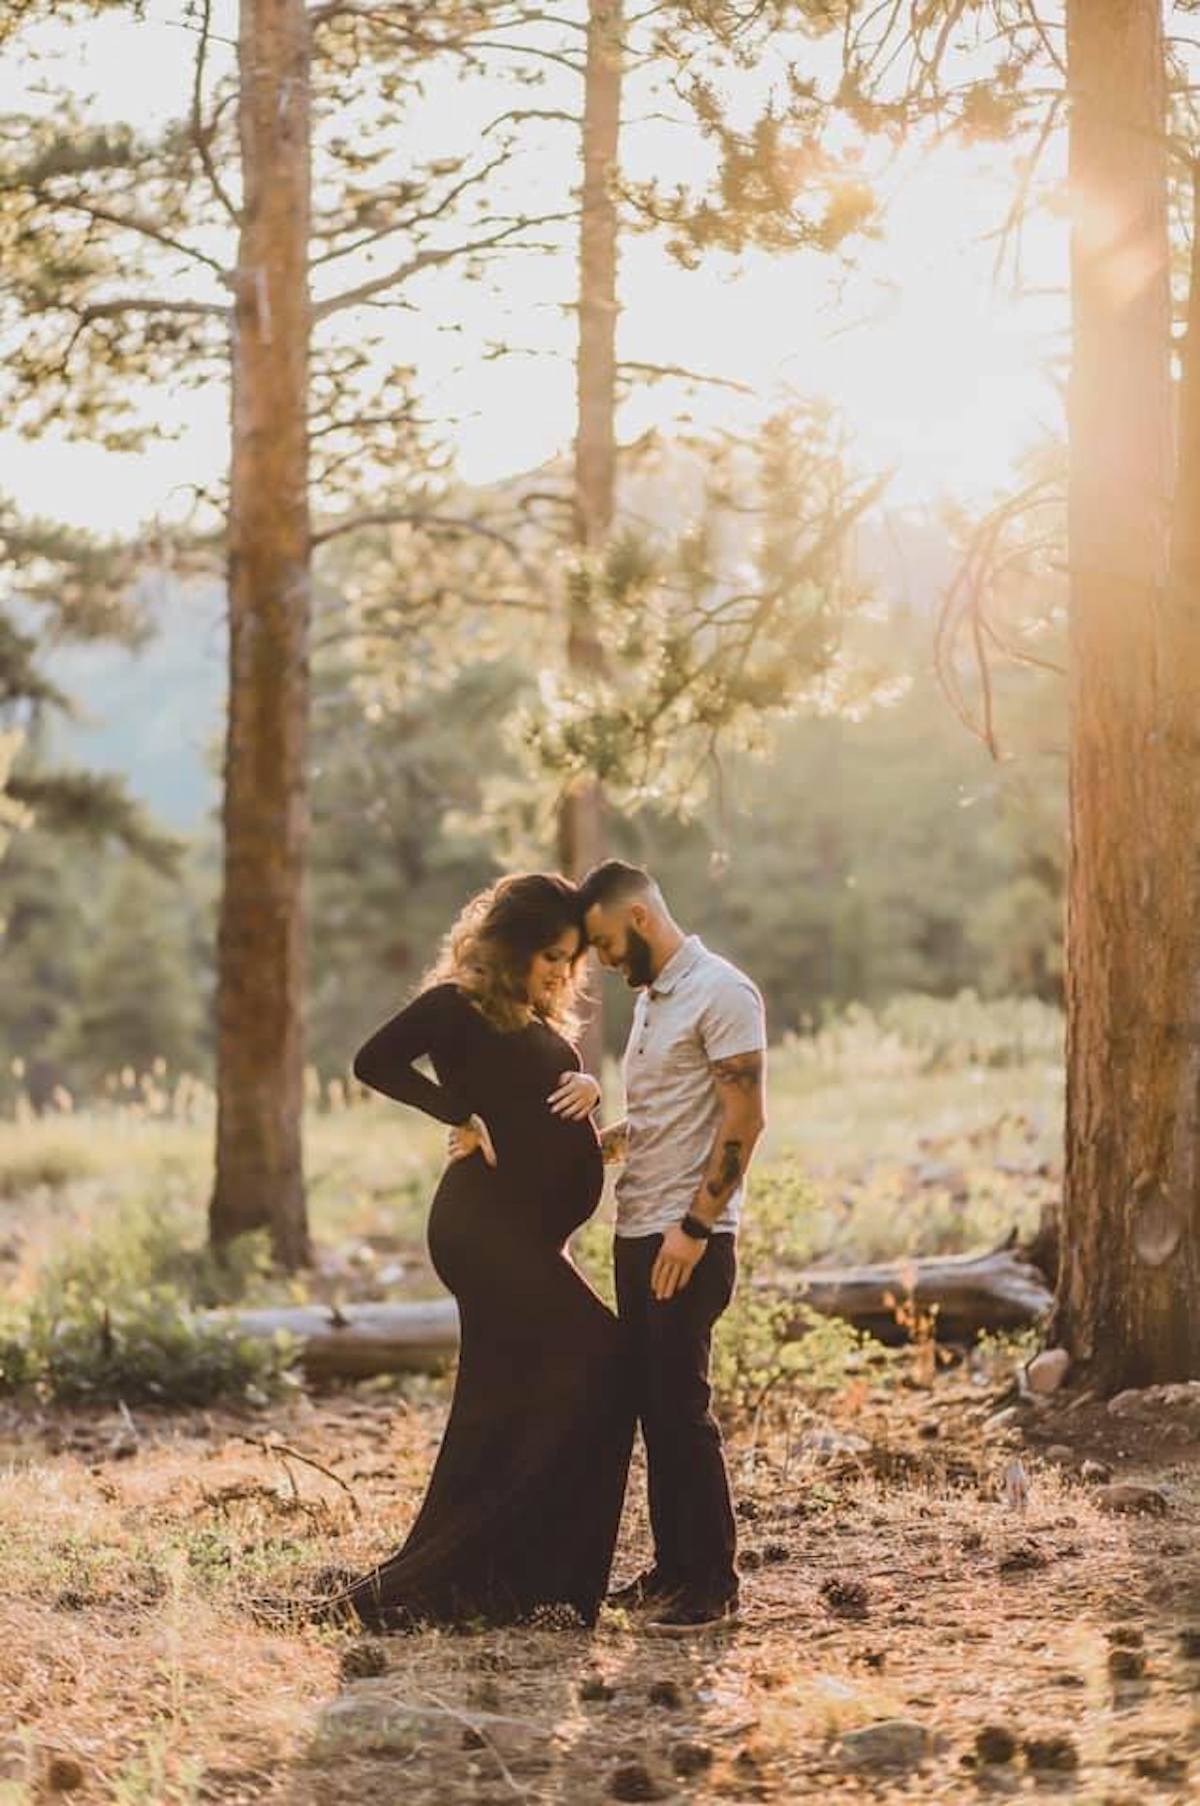 For photoshoot couples ideas pregnant